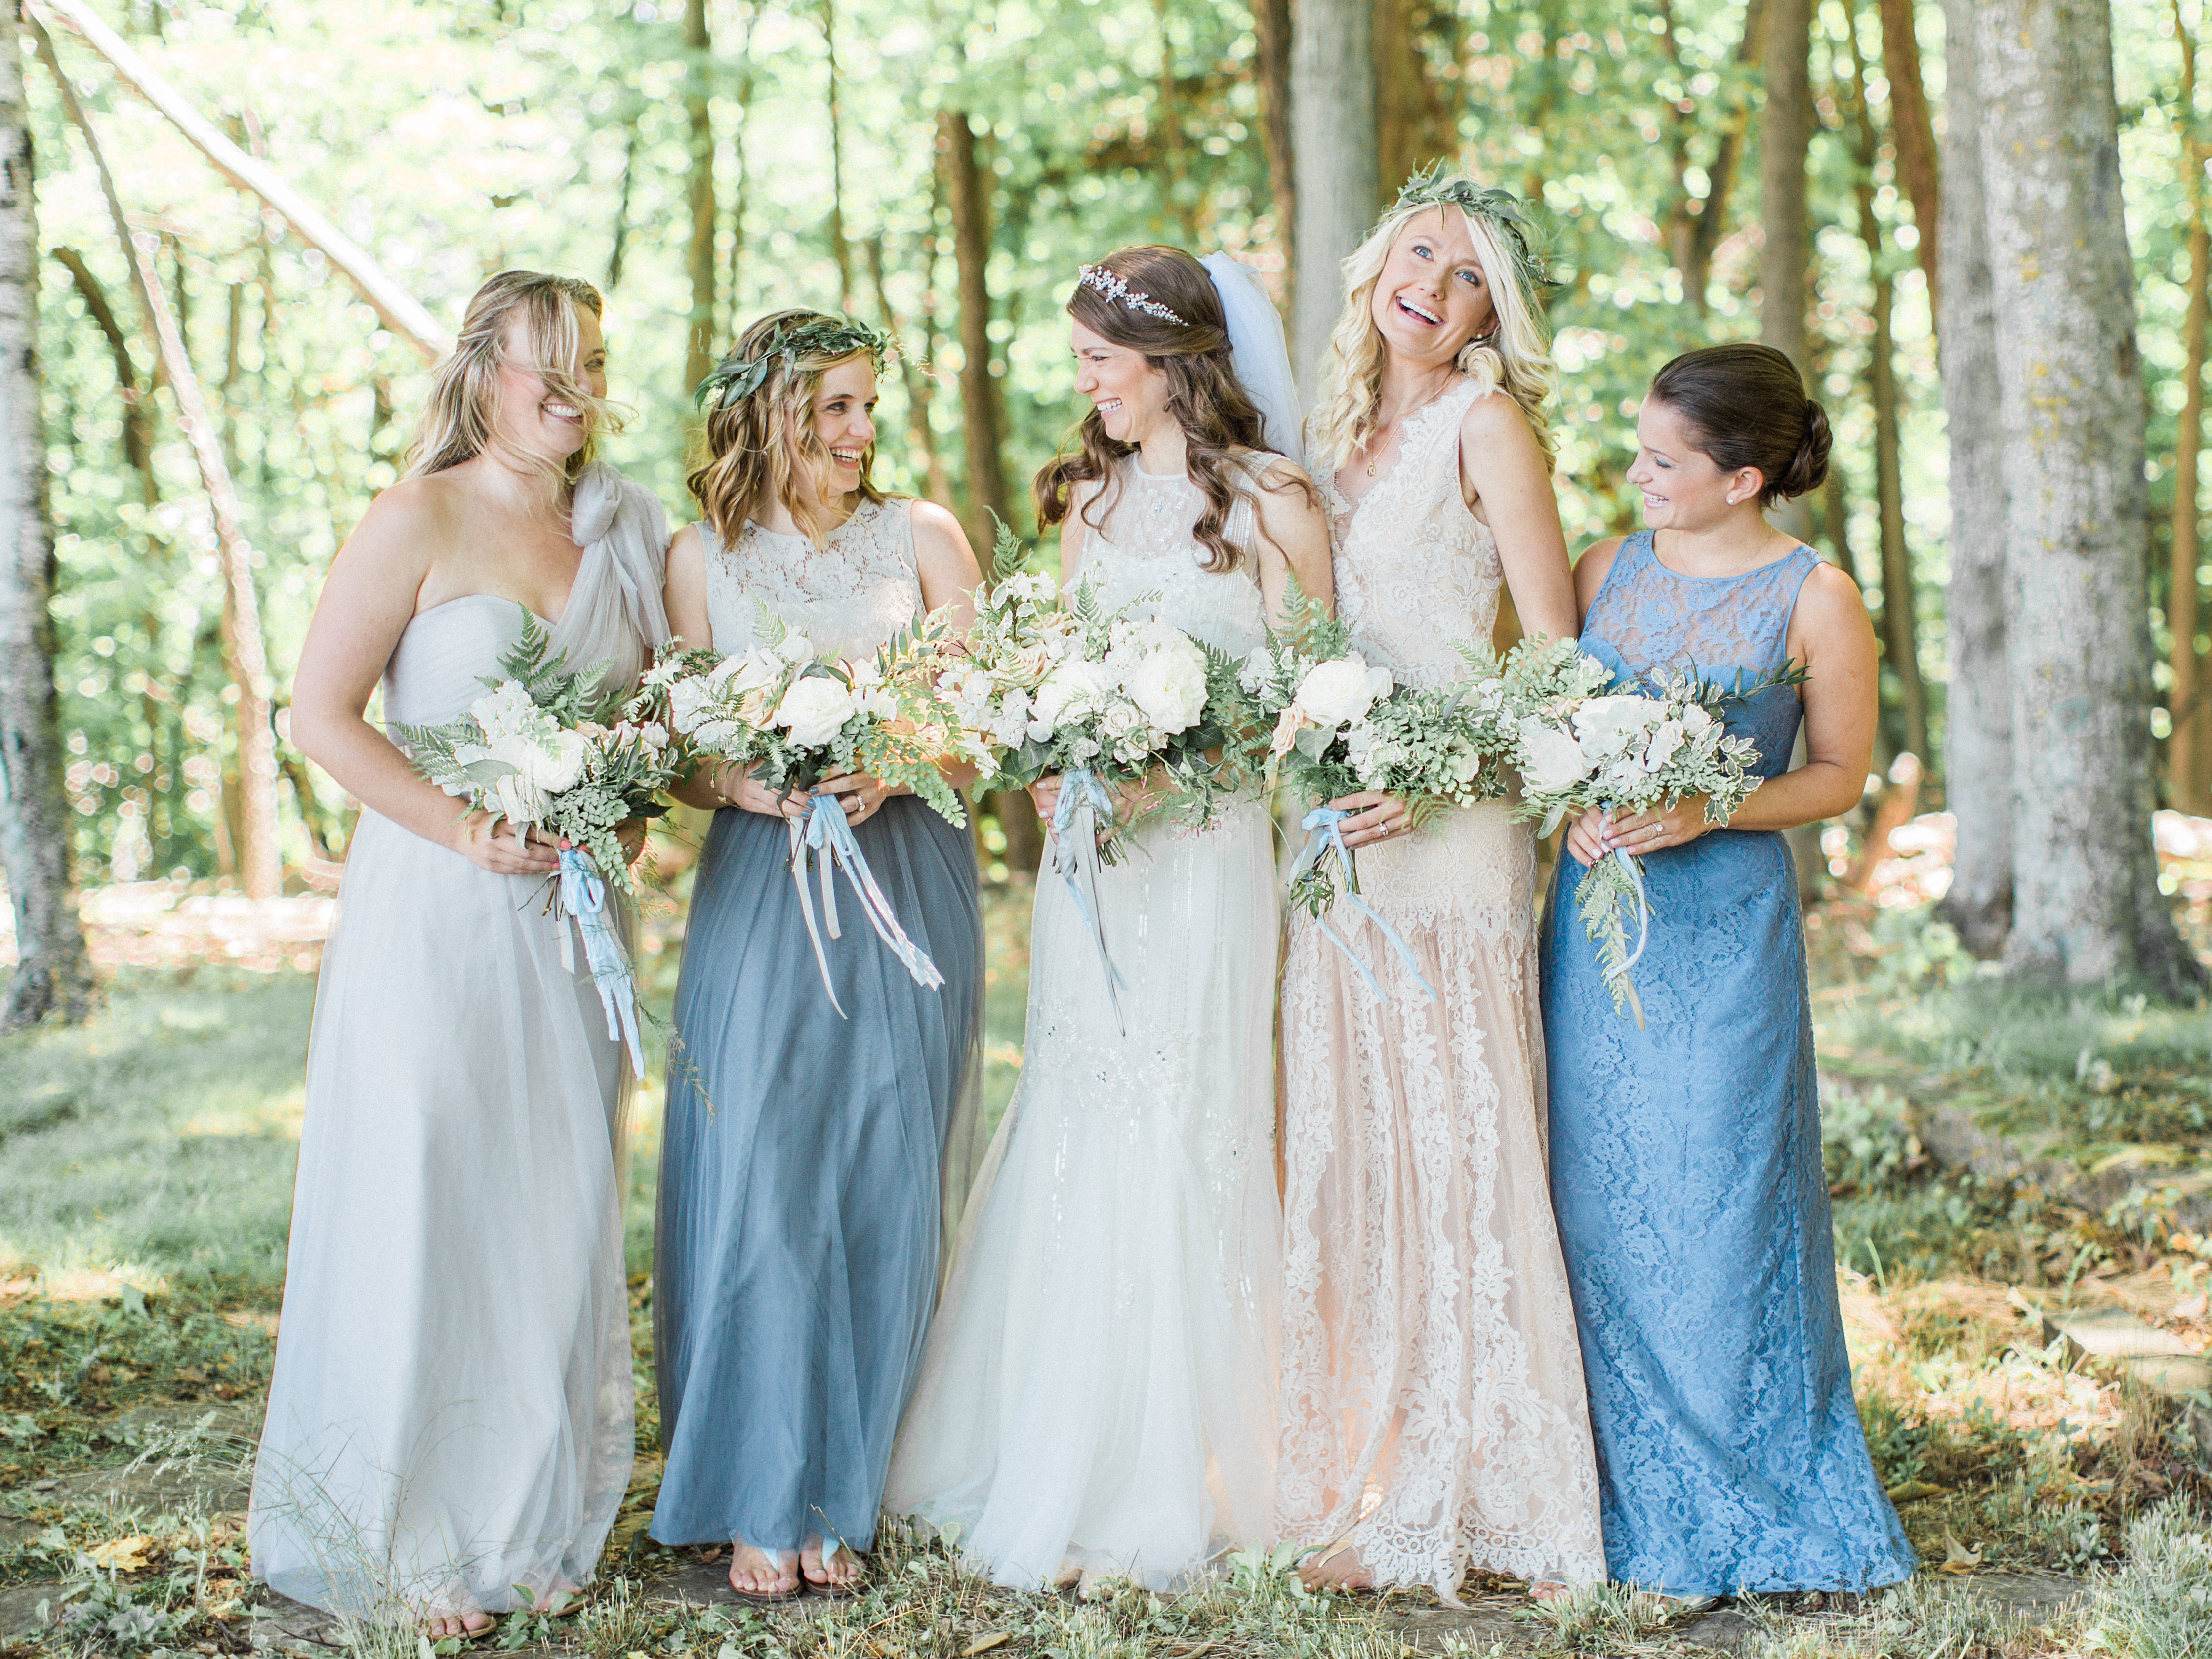 Mismatched Bridesmaids Dresses | The Day's Design | Samantha James Photography